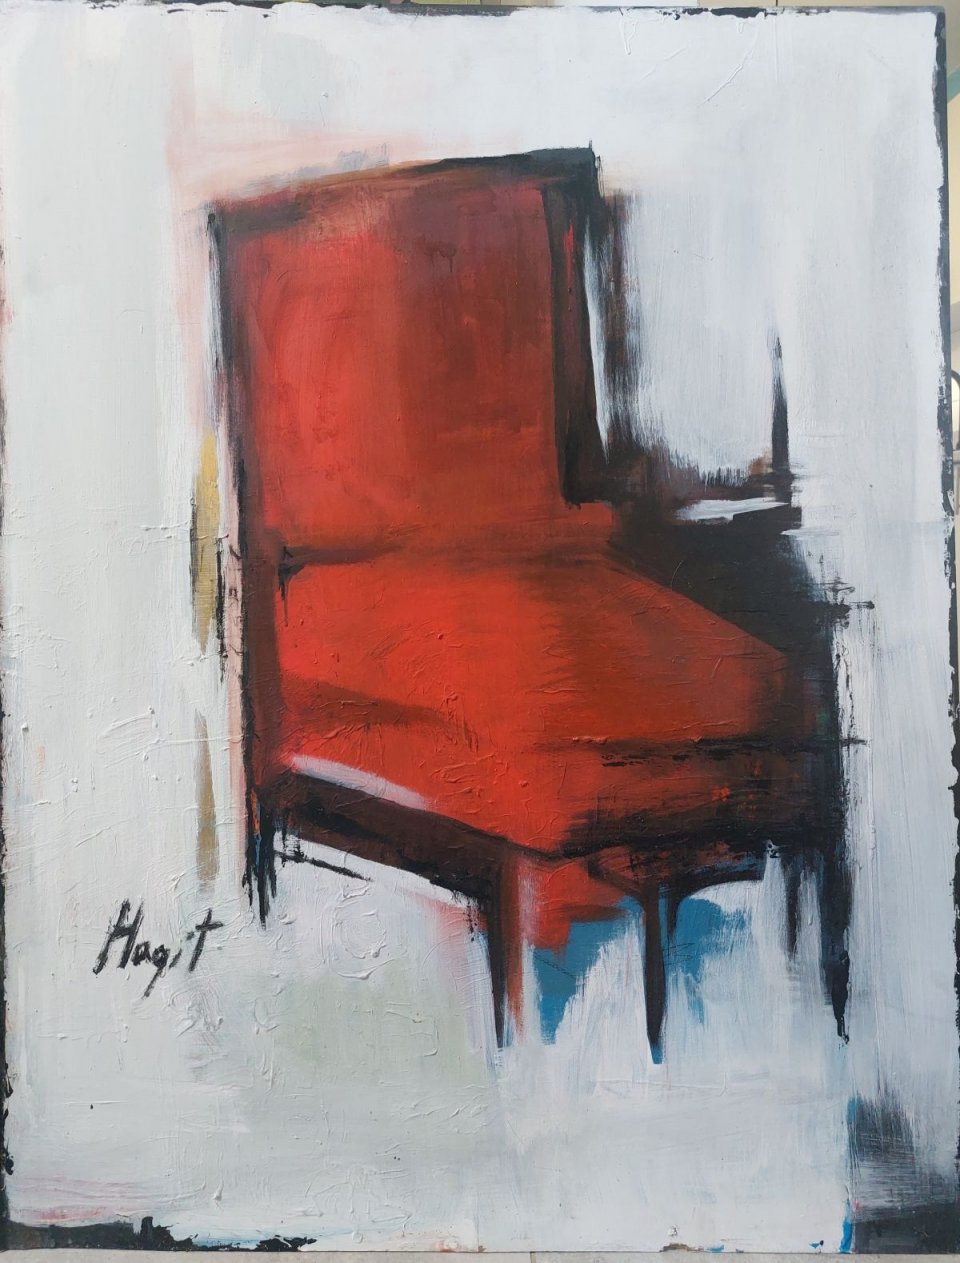 כיסא אדום